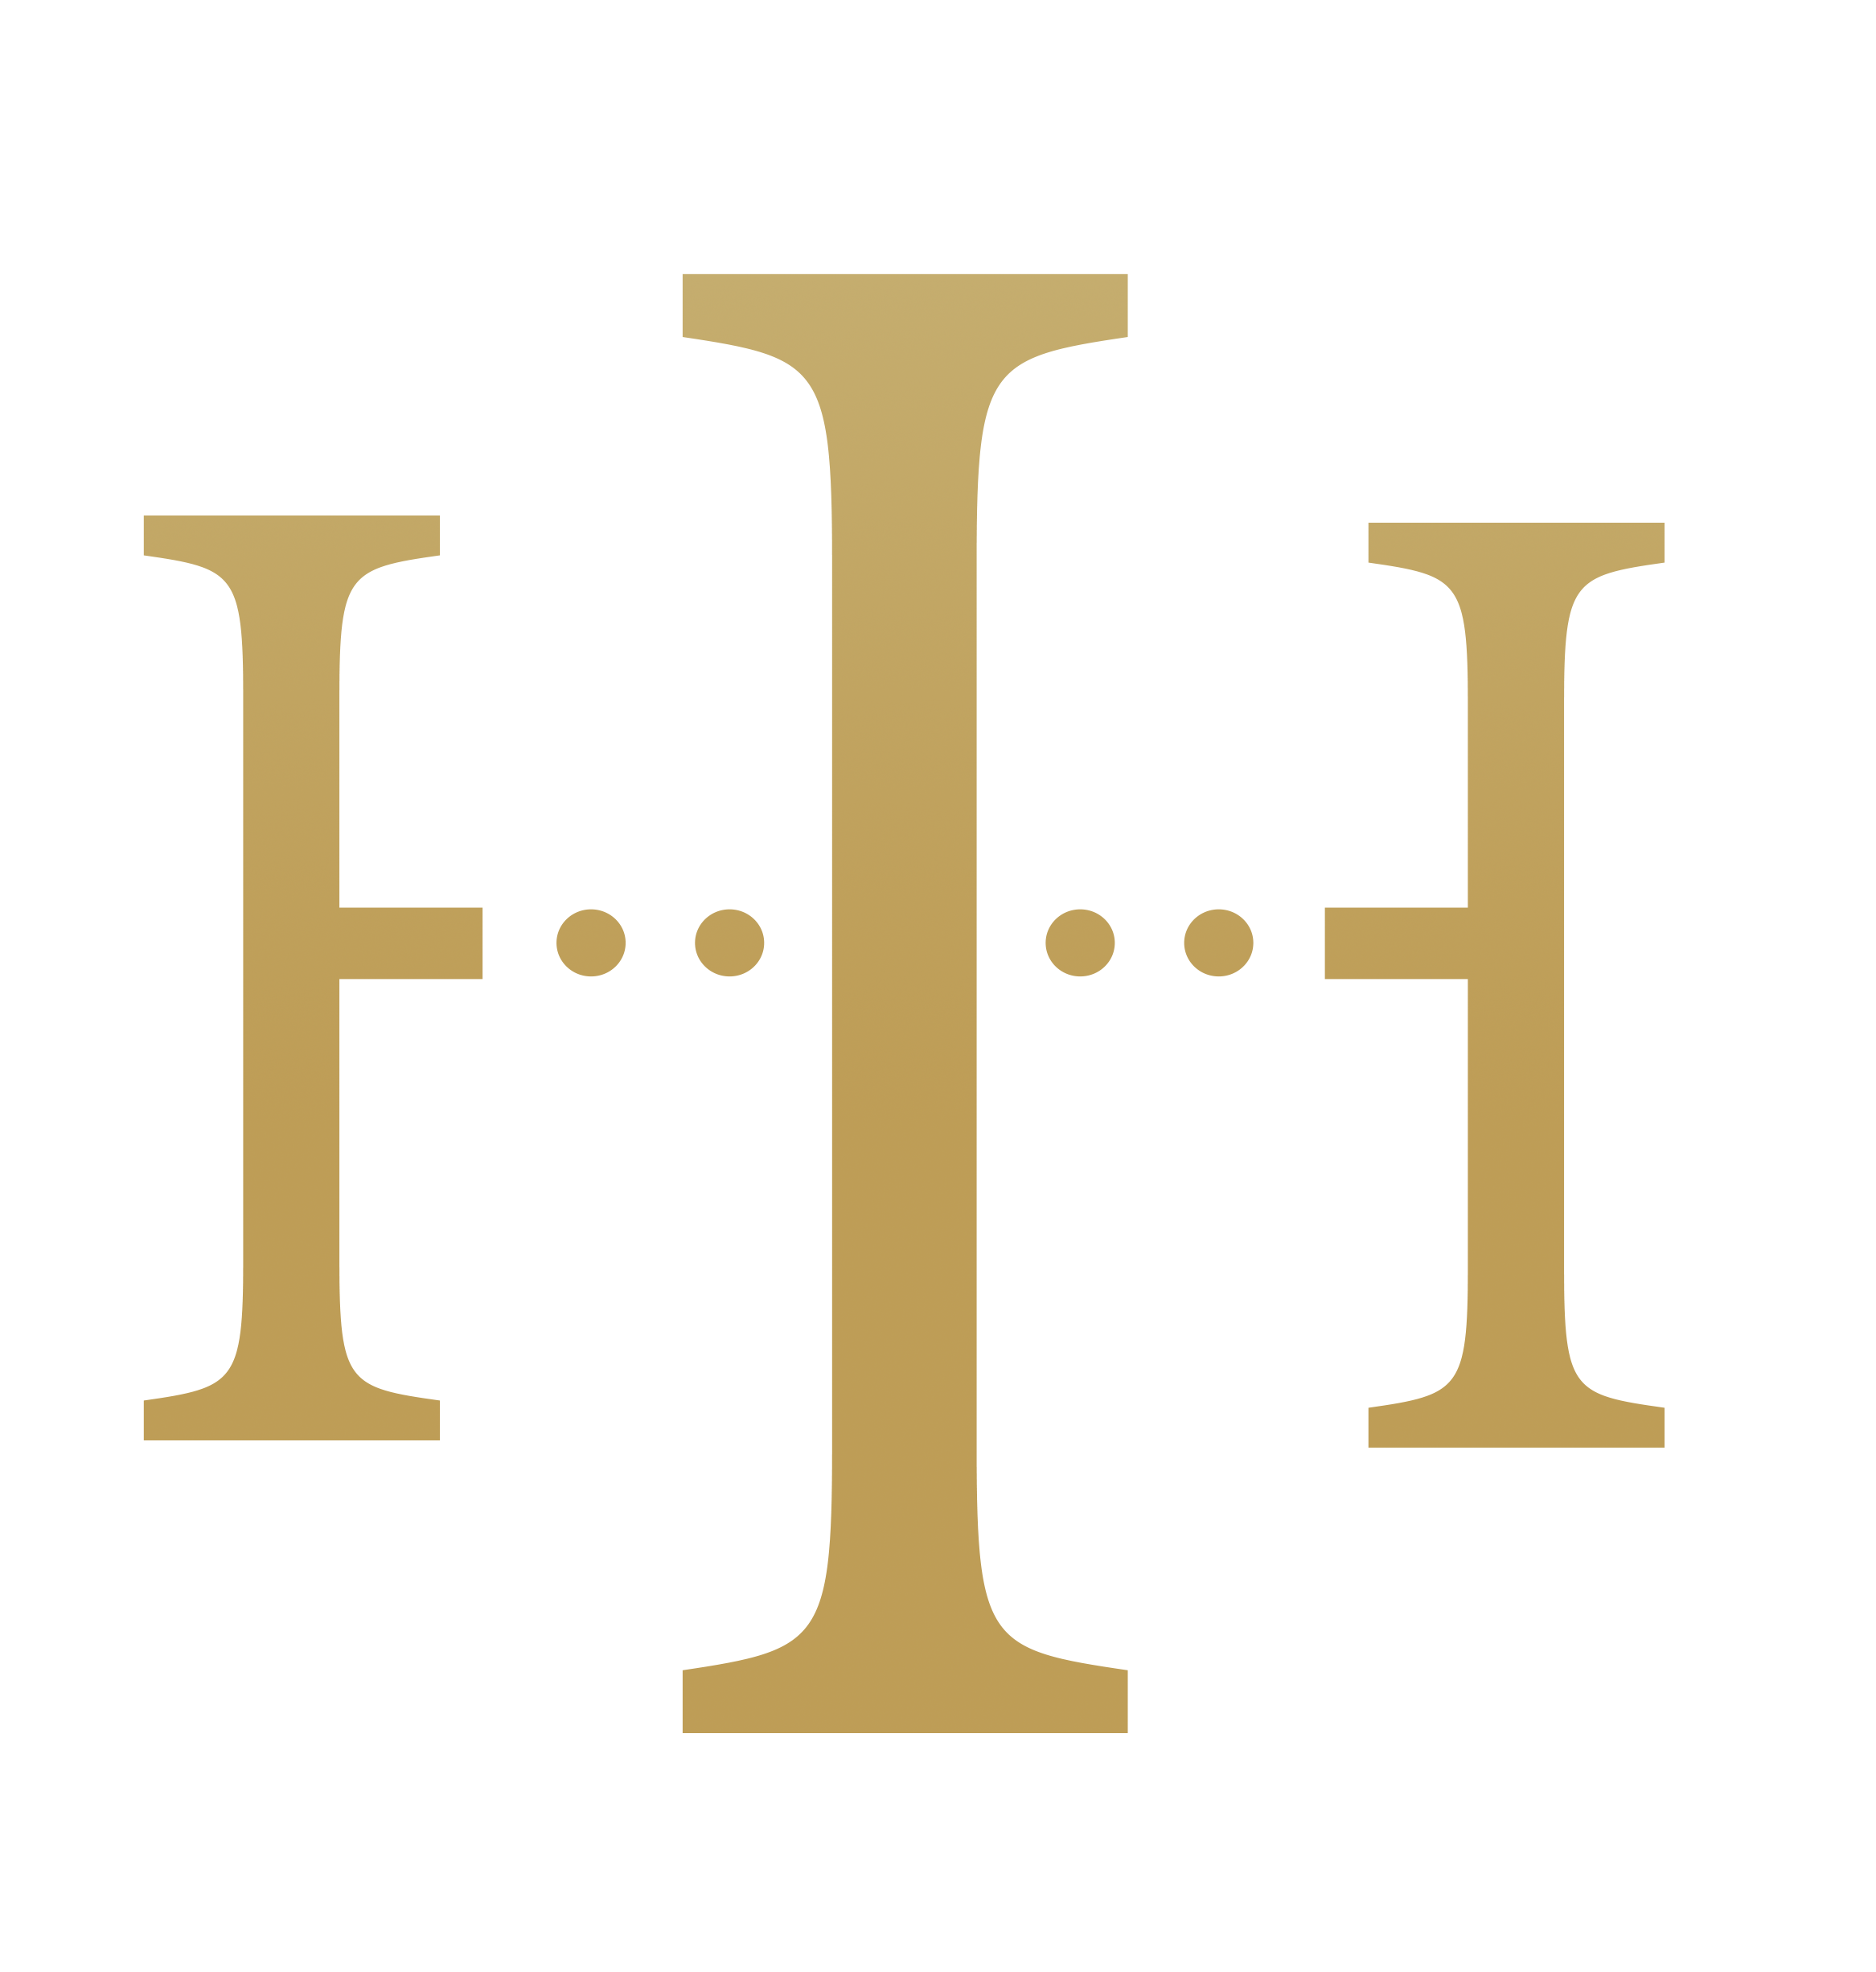 Ivy hoss logo